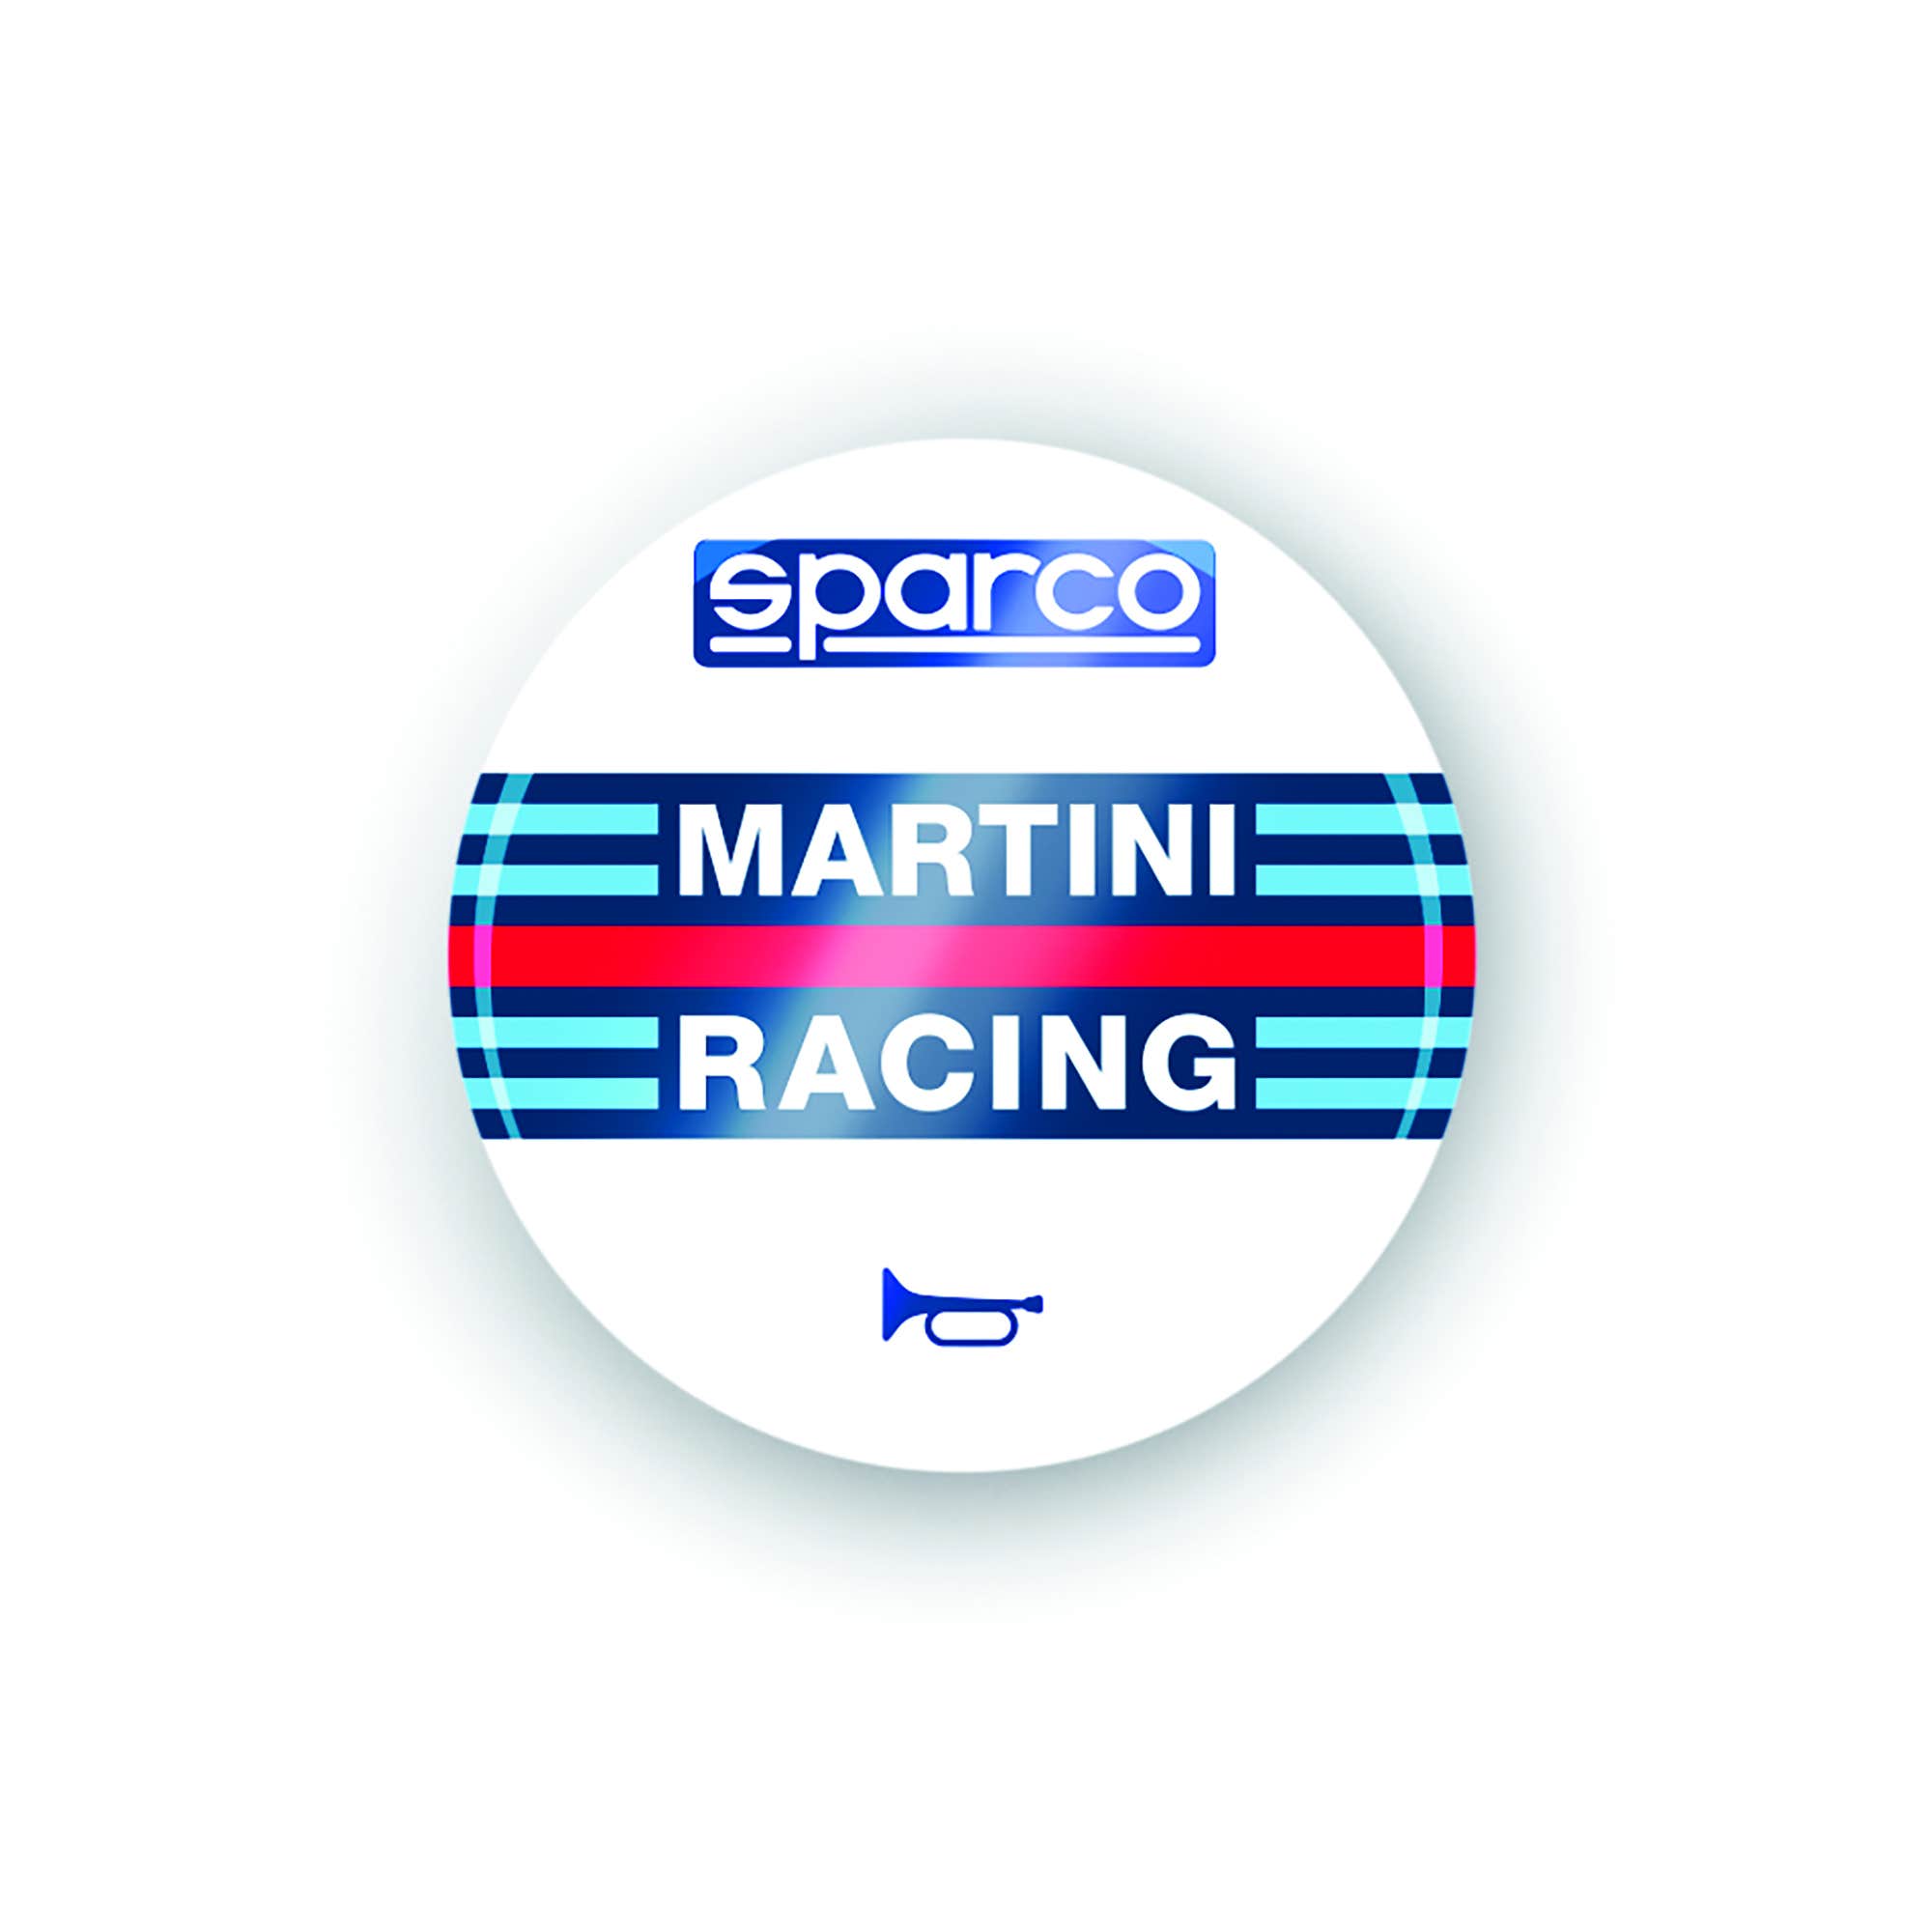 GEM STEERING WHEEL KIT MARTINI RACING - Sparco Shop